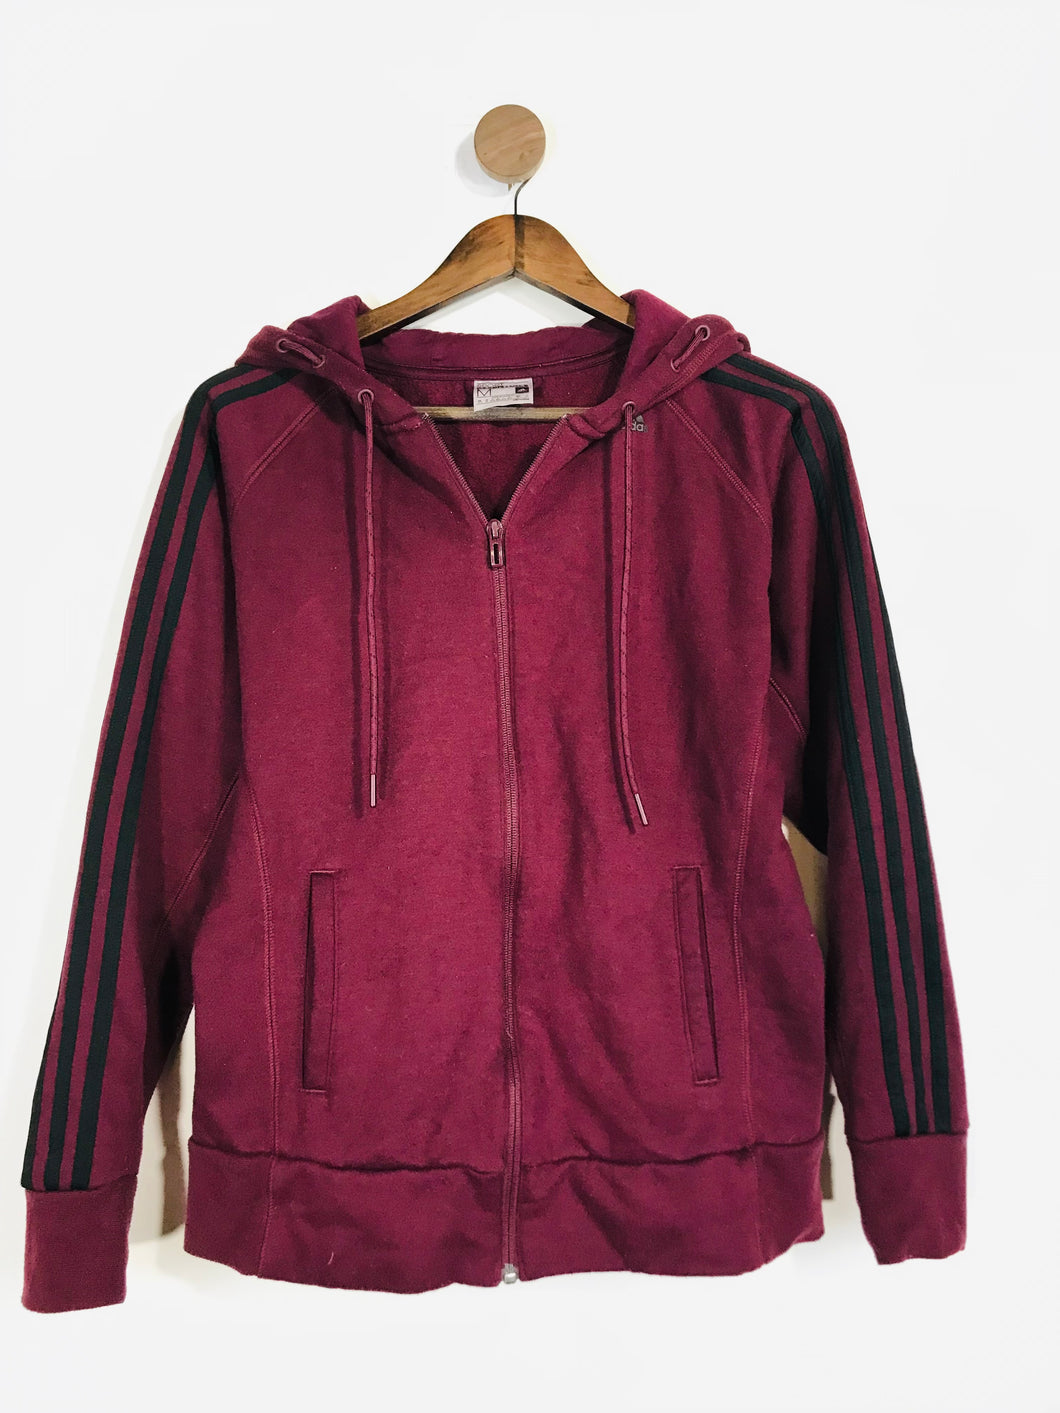 Adidas Women's Zip Hoodie Sports Jacket | M UK10-12 | Purple